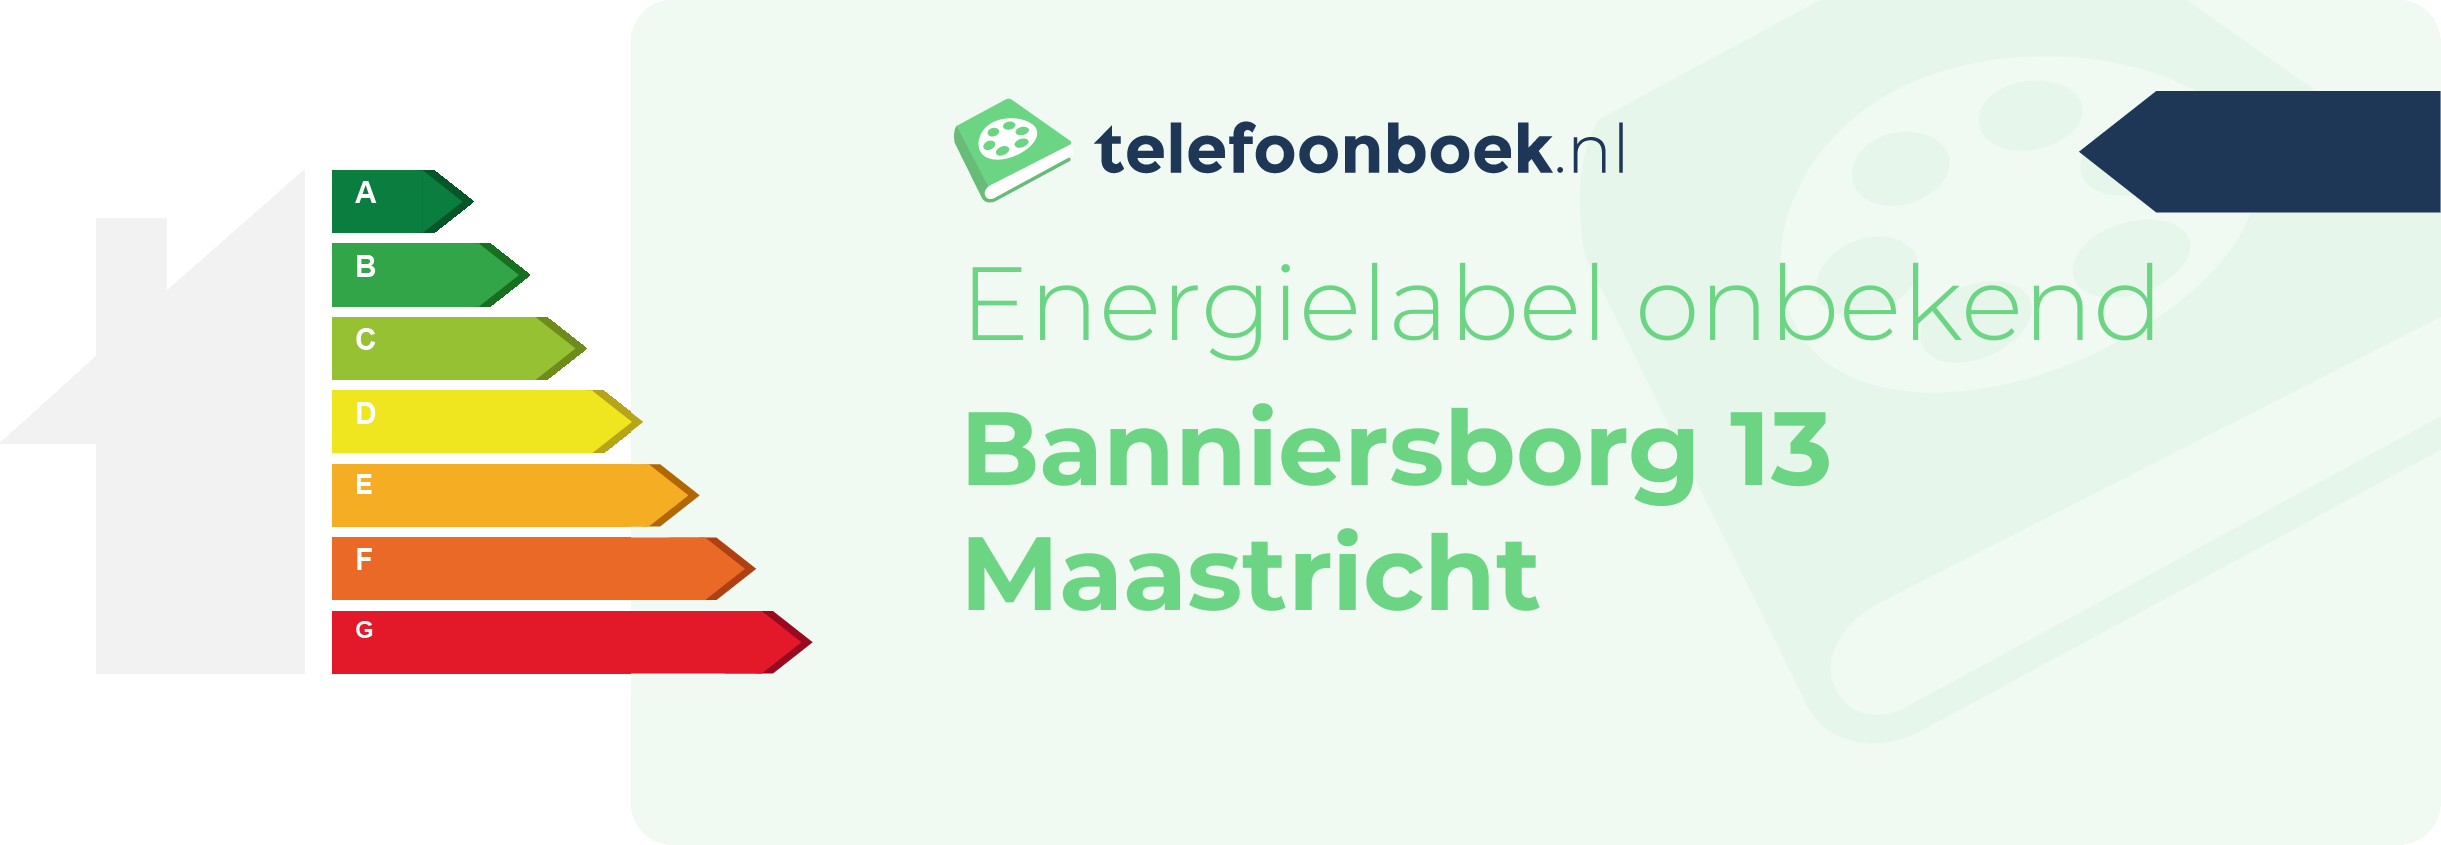 Energielabel Banniersborg 13 Maastricht